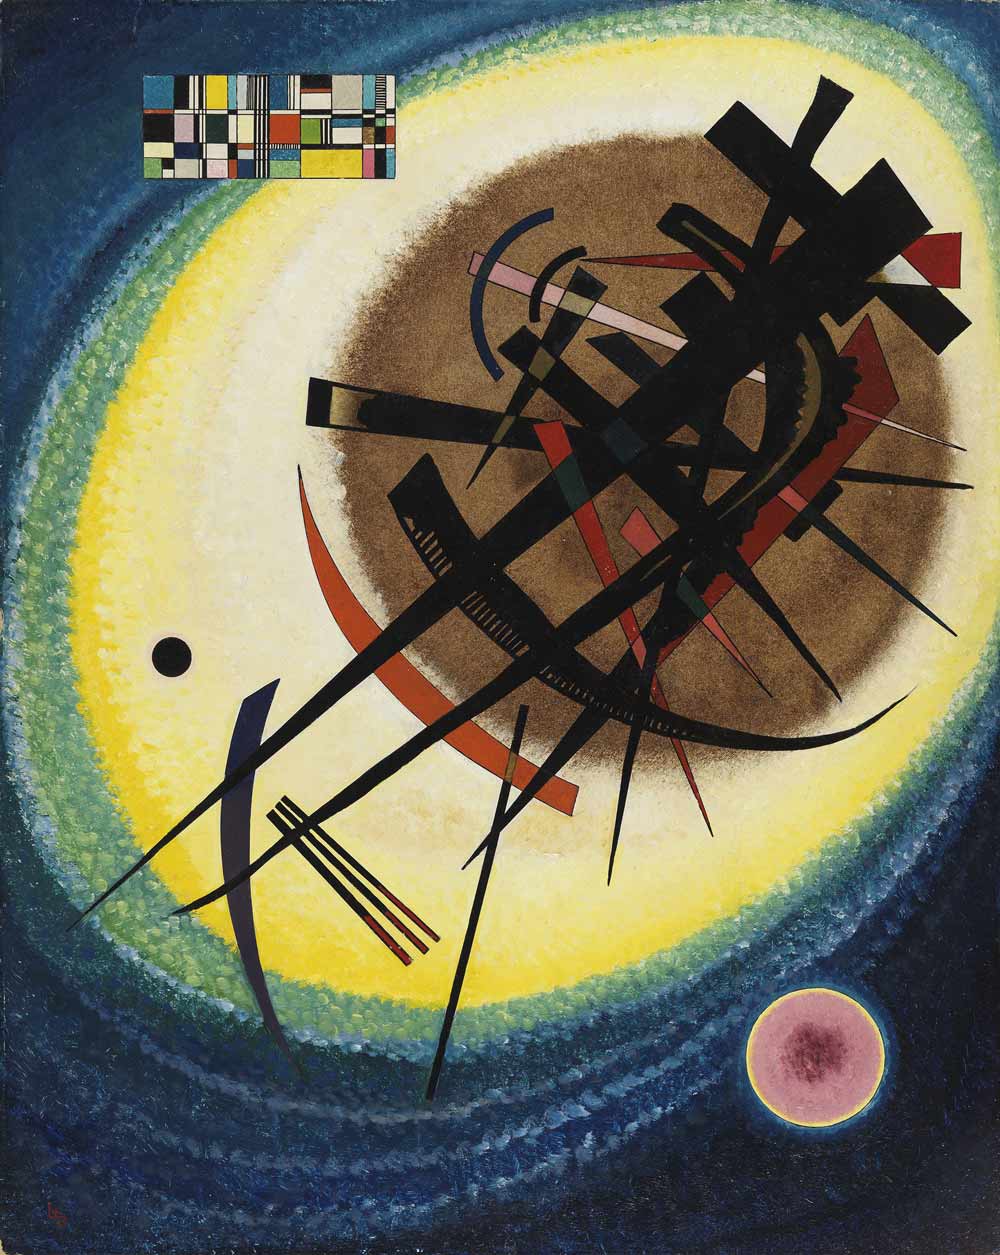 [K] Vasily Kandinsky - The Bright Oval